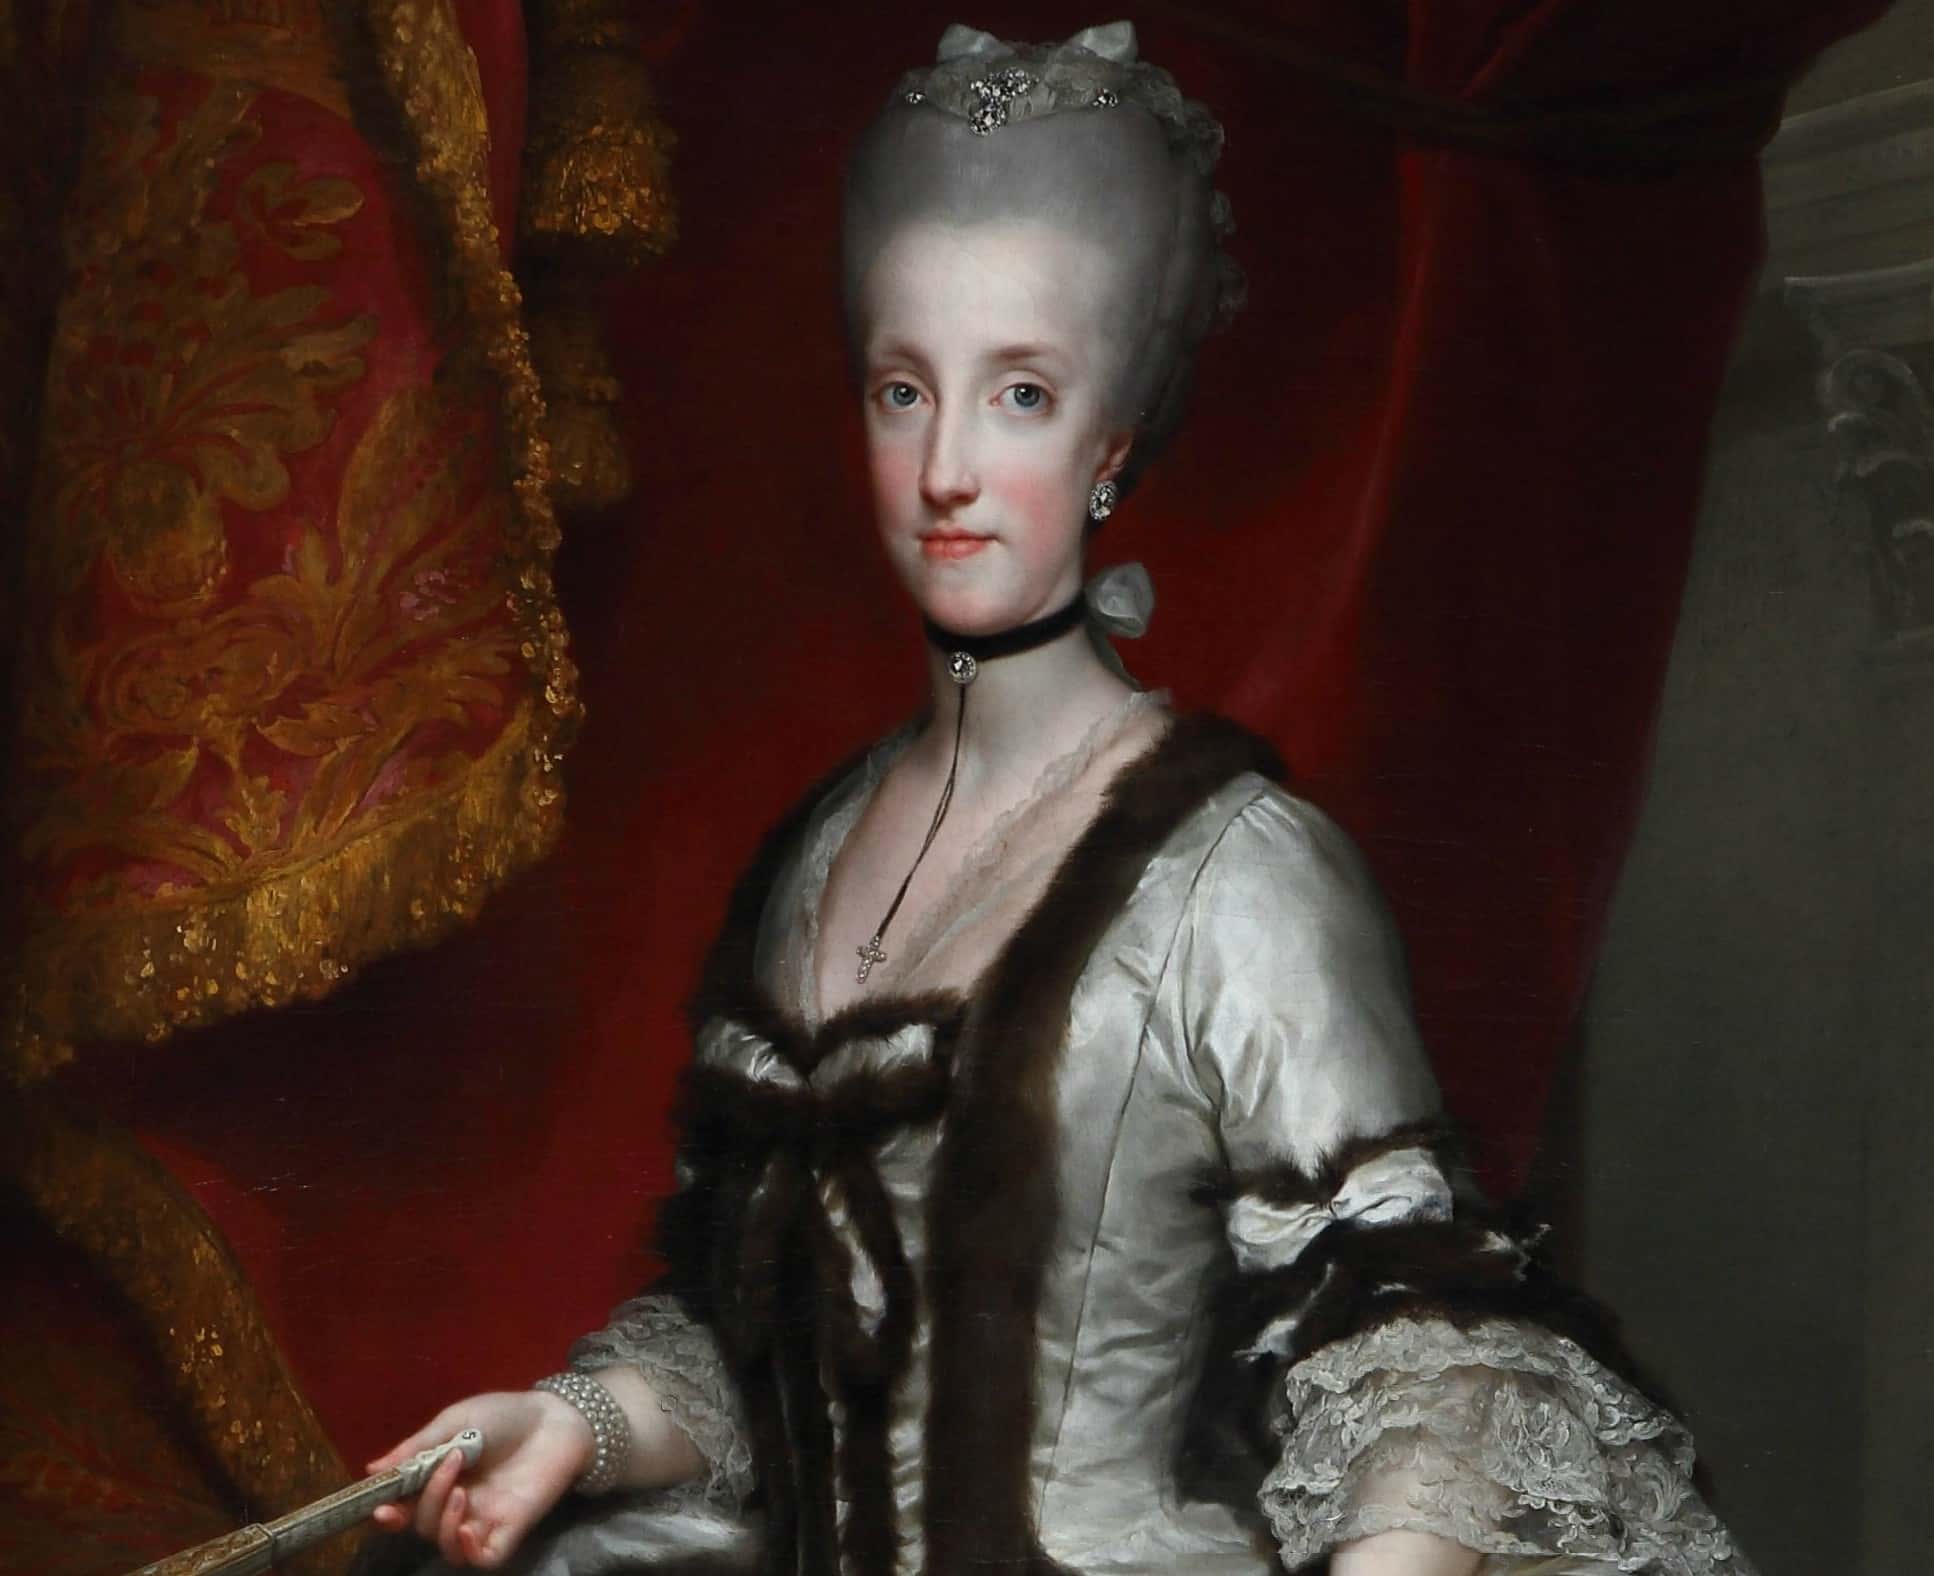 Queen Maria Carolina of Habsburg-Lorraine